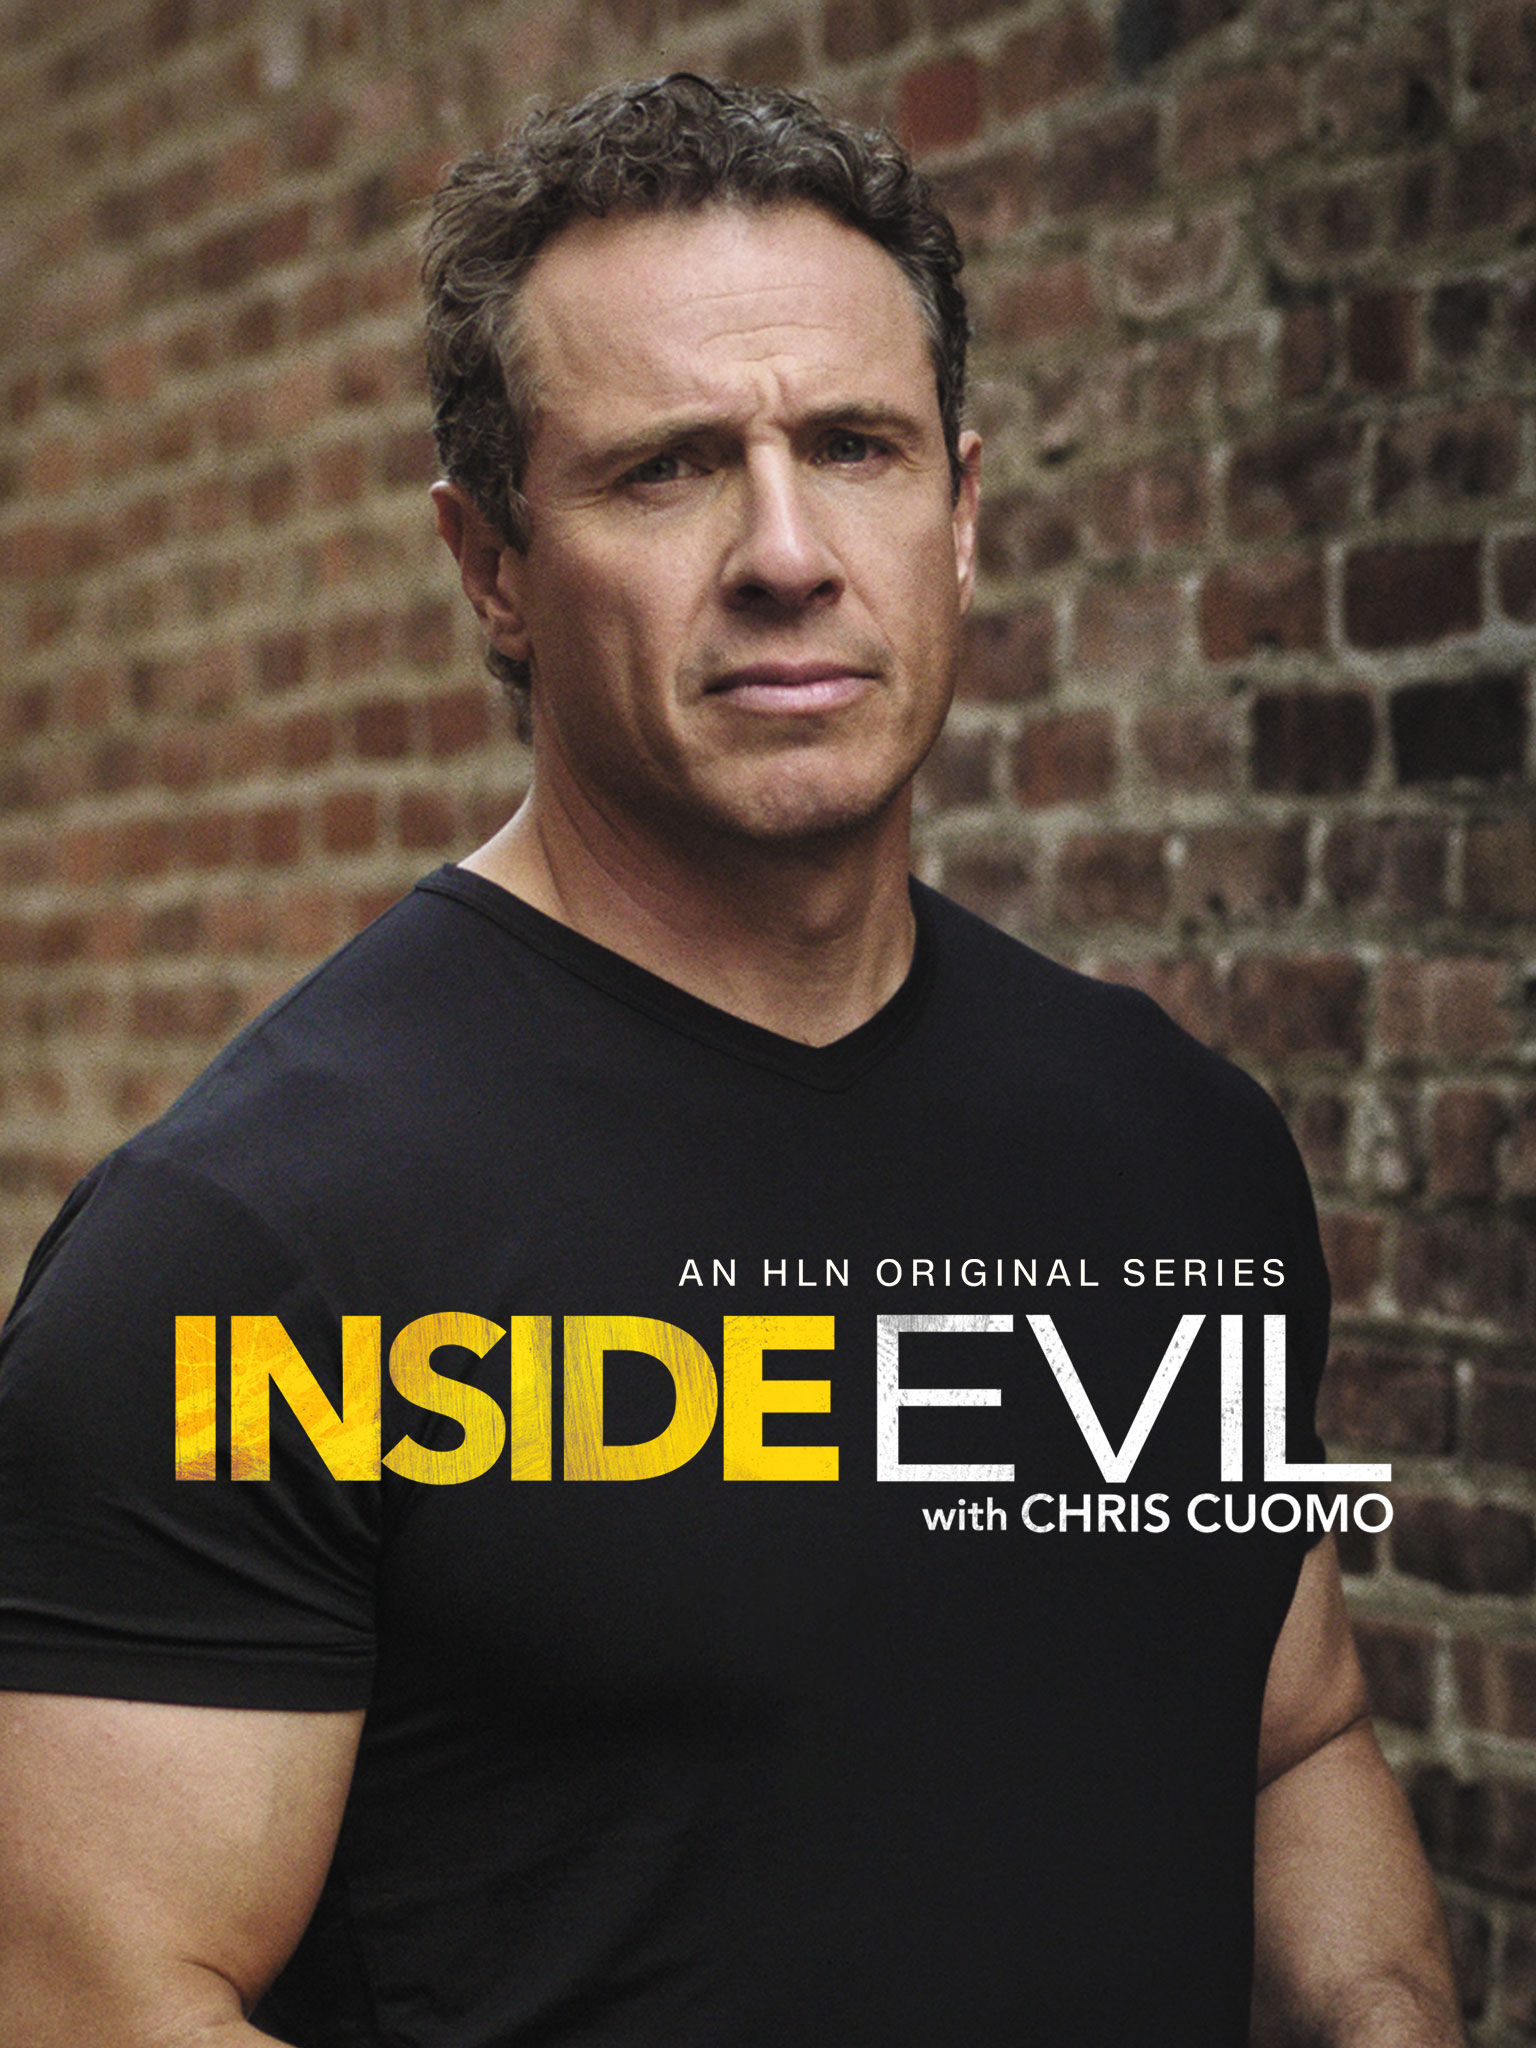 Inside Evil with Chris Cuomo Image #397209 TVmaze.